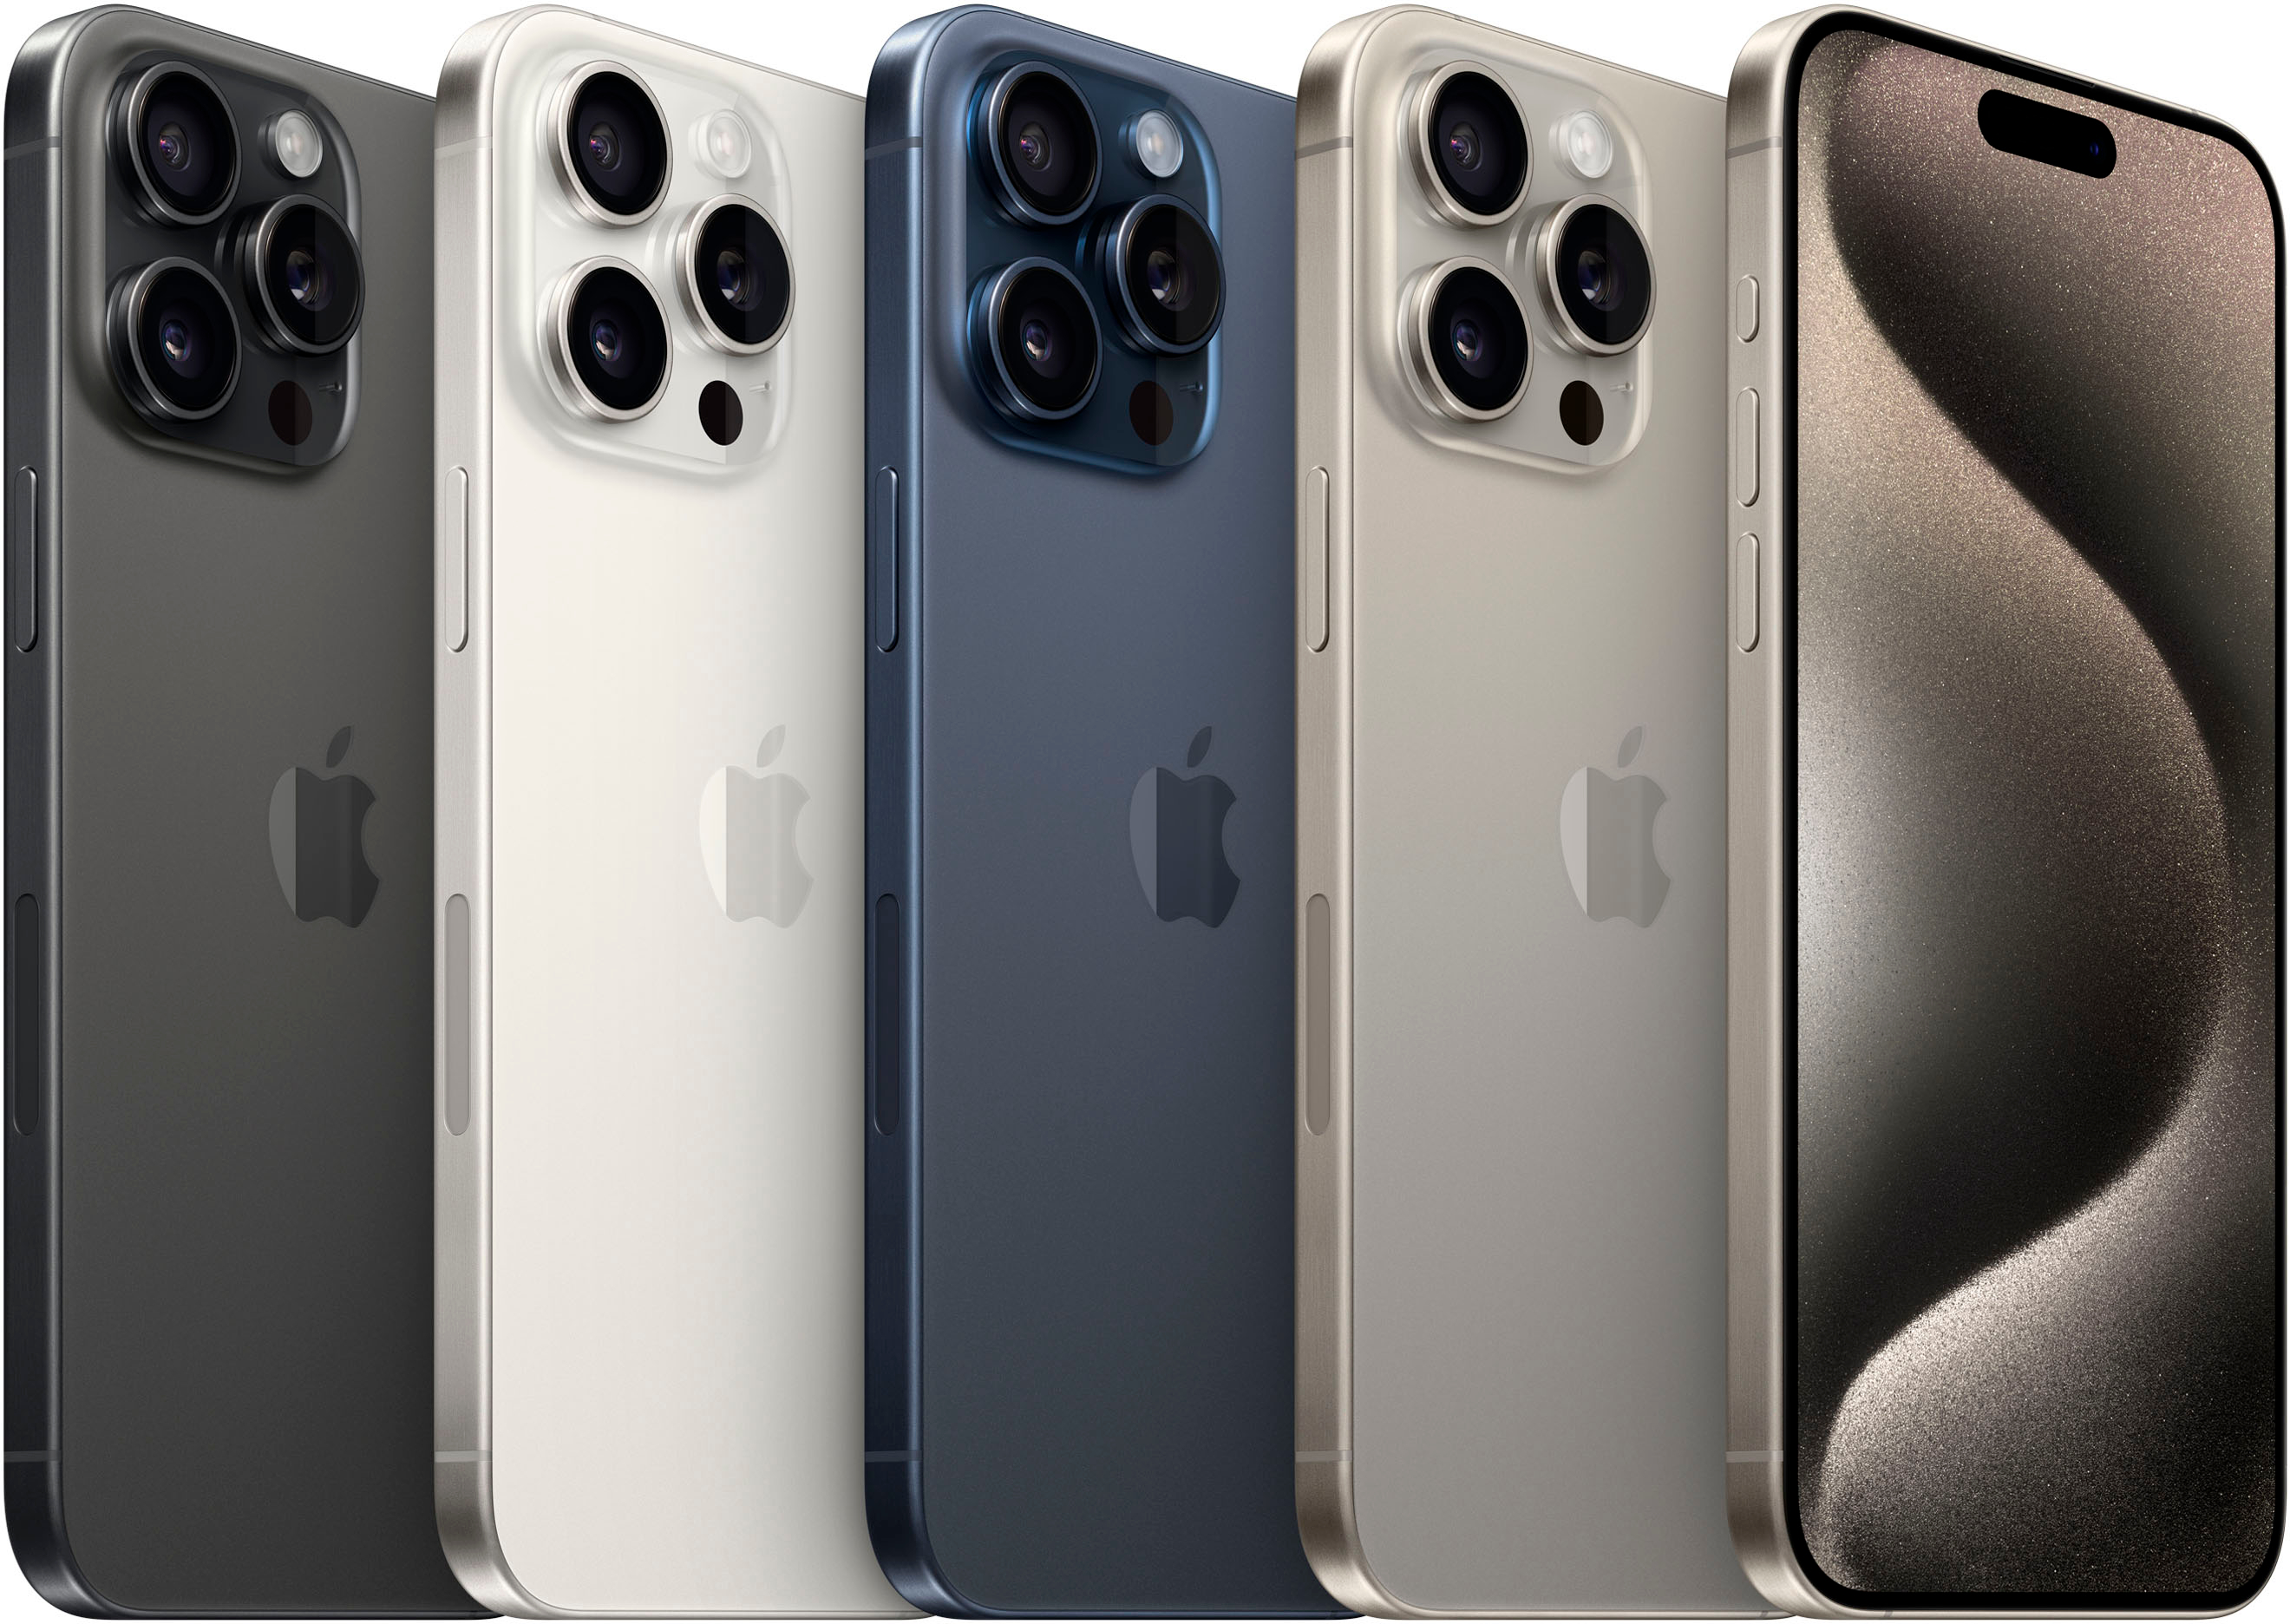 Apple iPhone 14 Pro Max - 256GB - All Colors - Verizon Locked - Excellent 